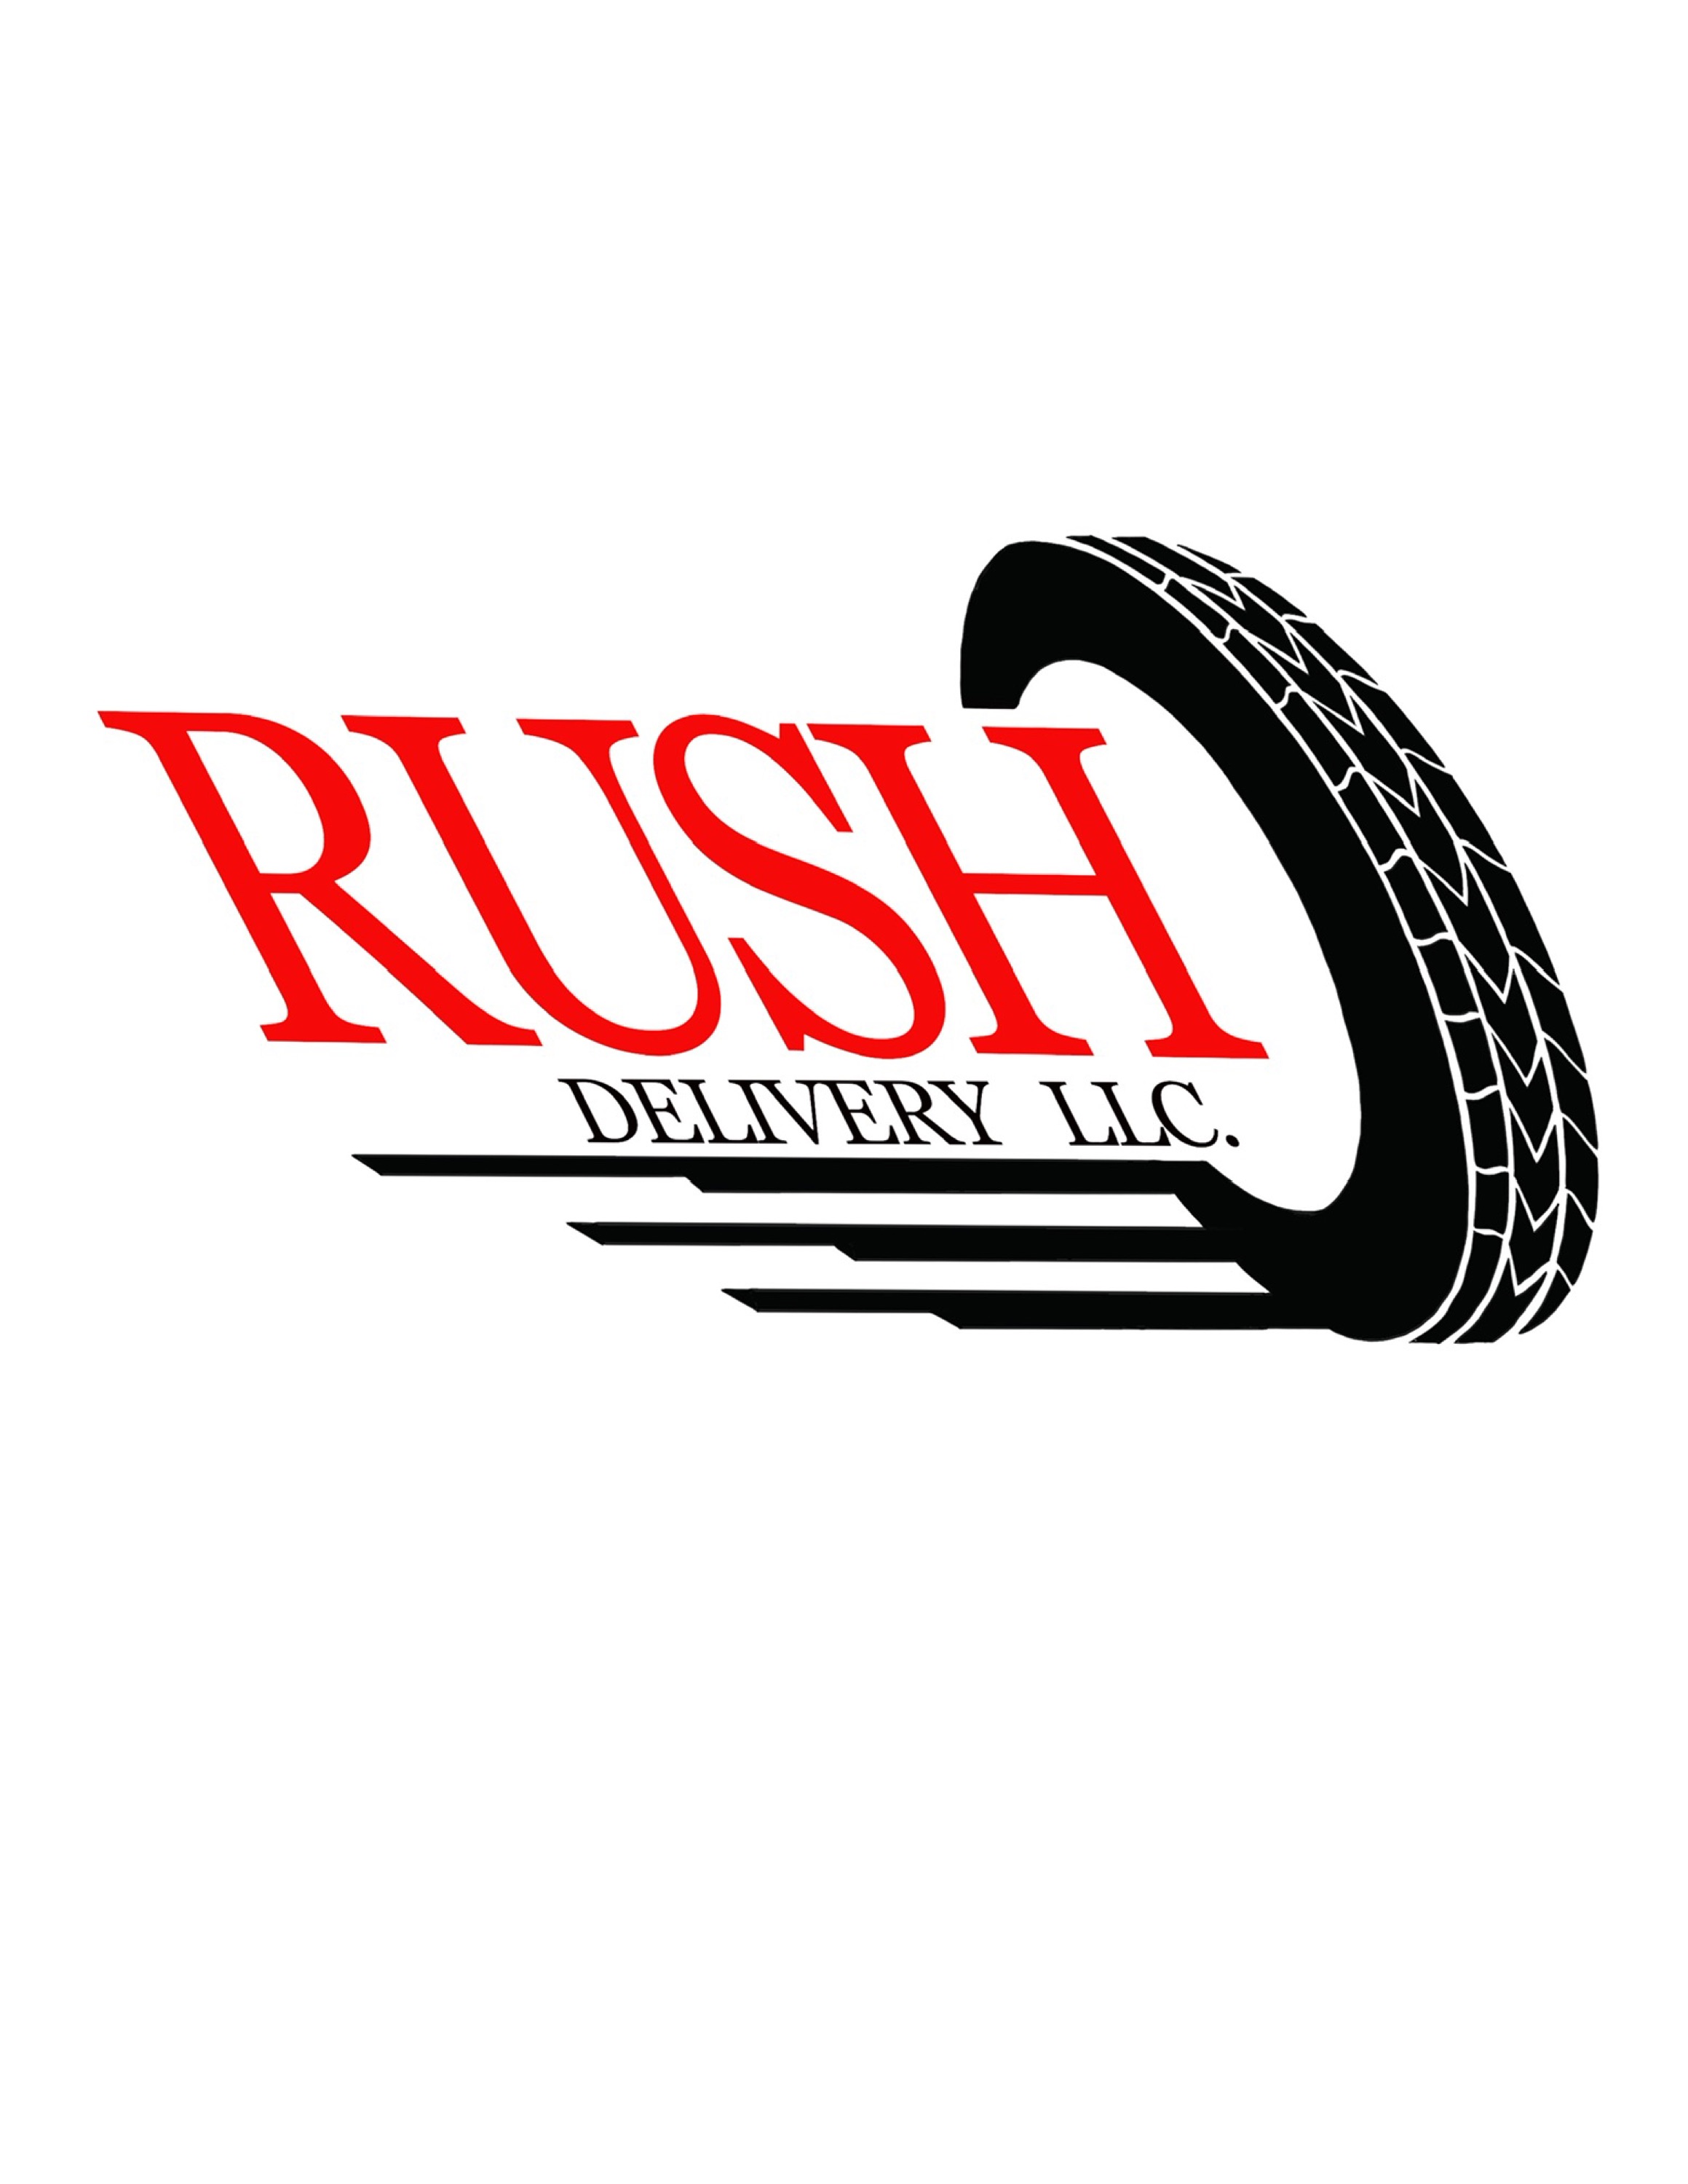 Rush Delivery LLC Logo